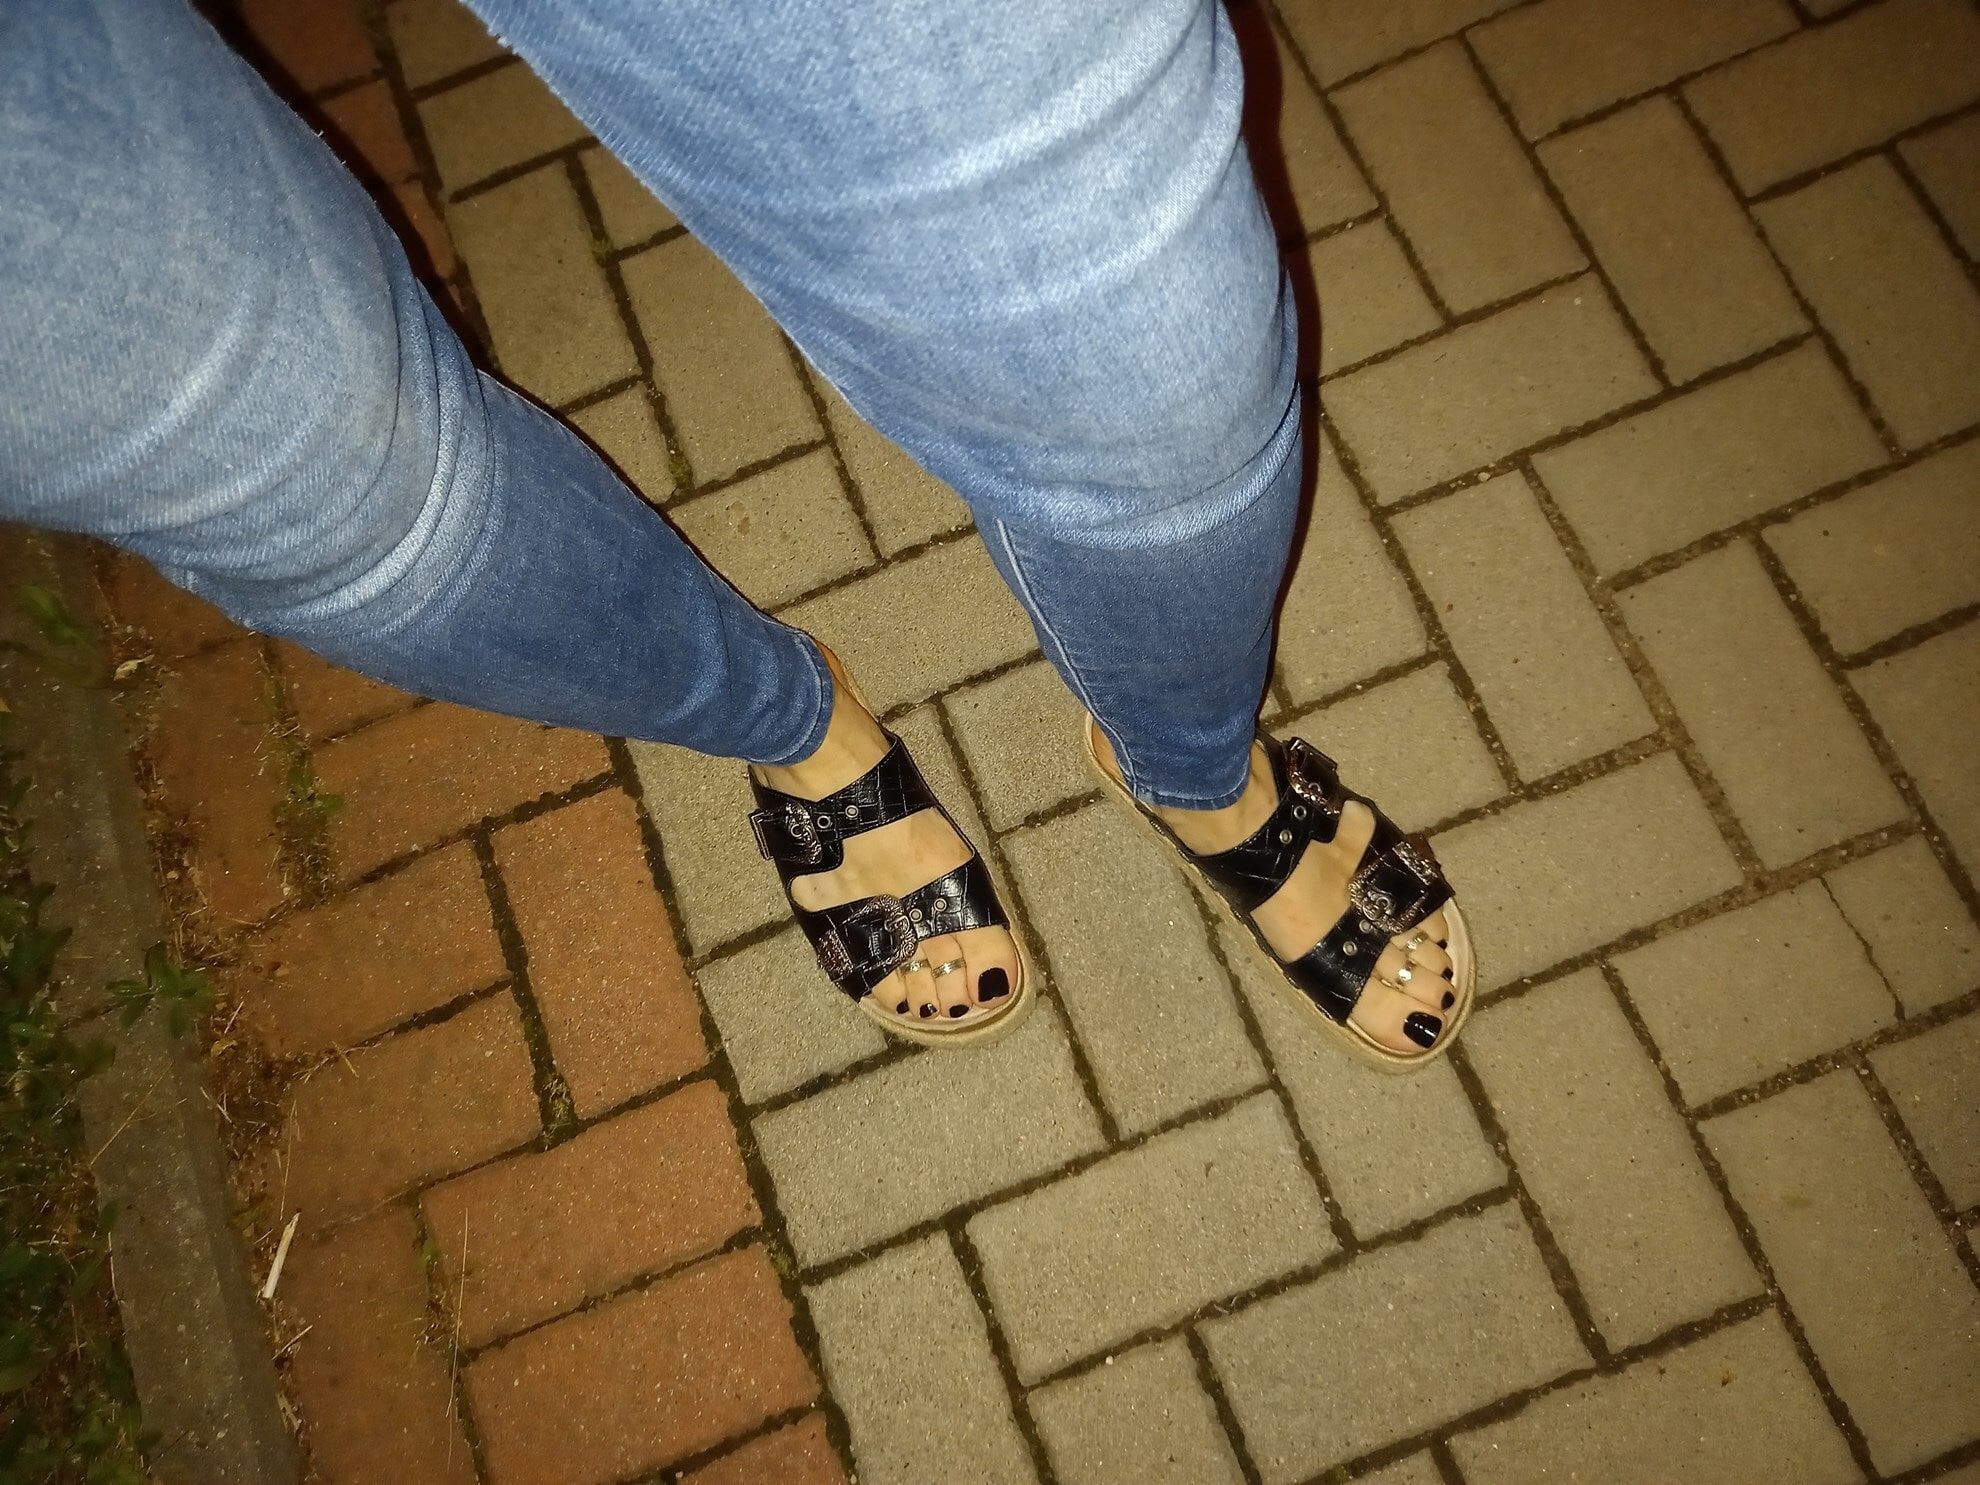 platform sandals and sexy feet